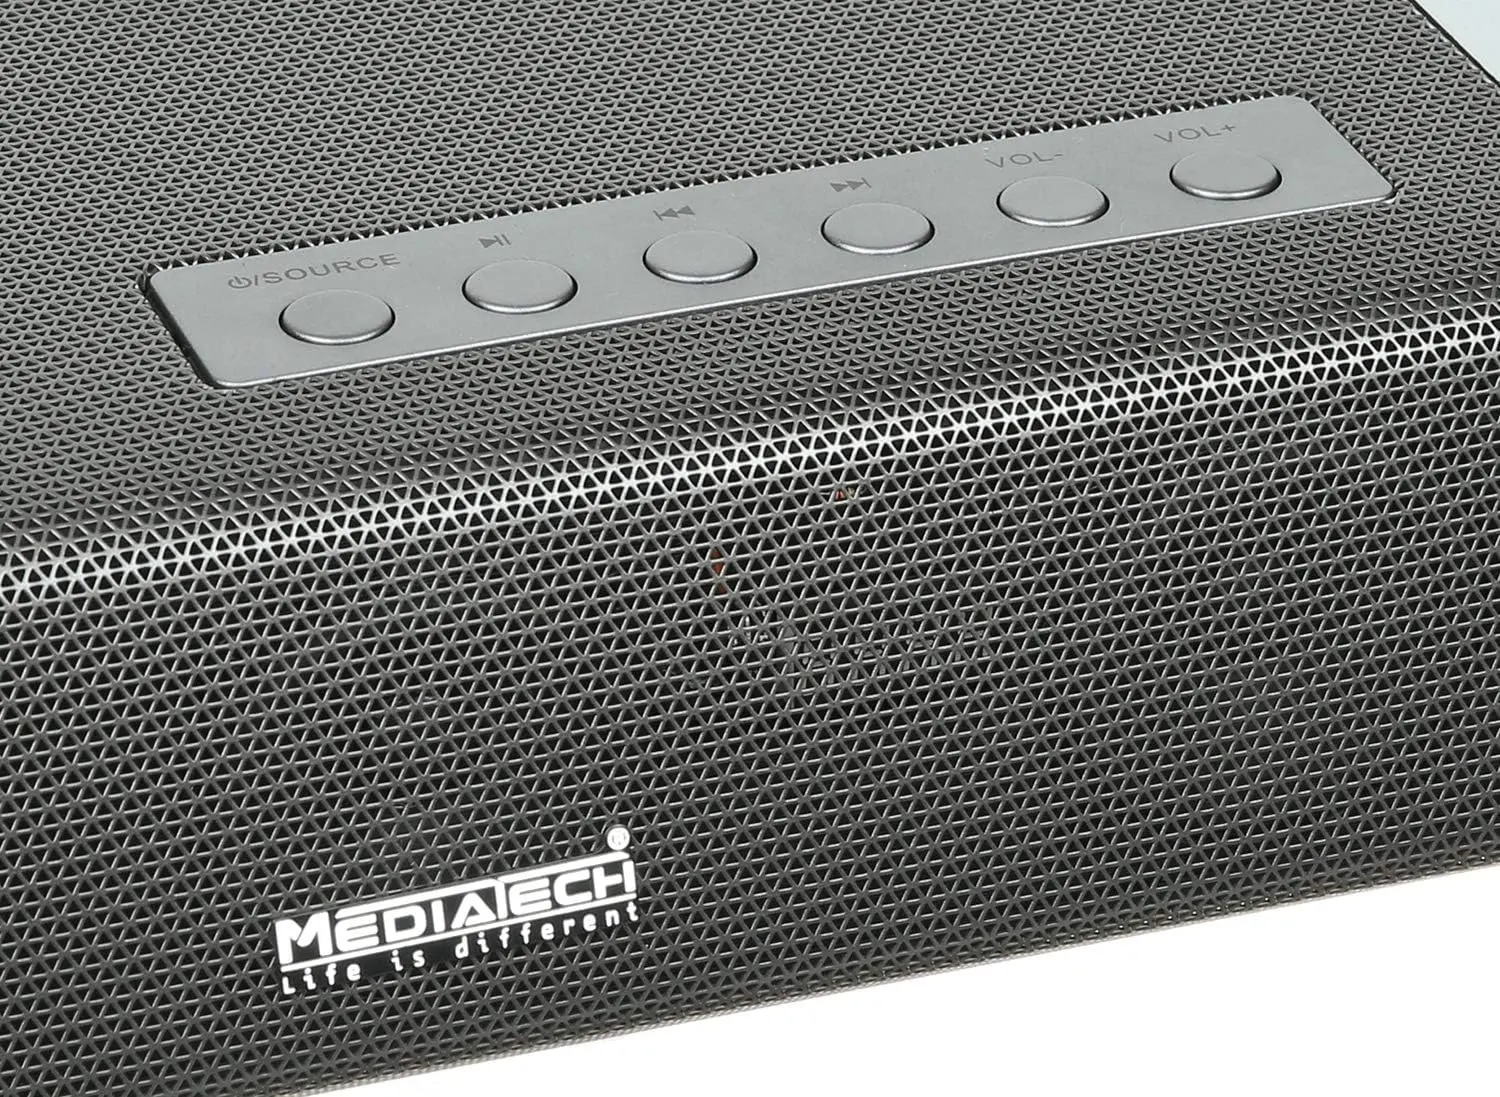 Media Tech subwoofer speakers , Bluetooth, 80 Watt, remote control, grey, MT-T100